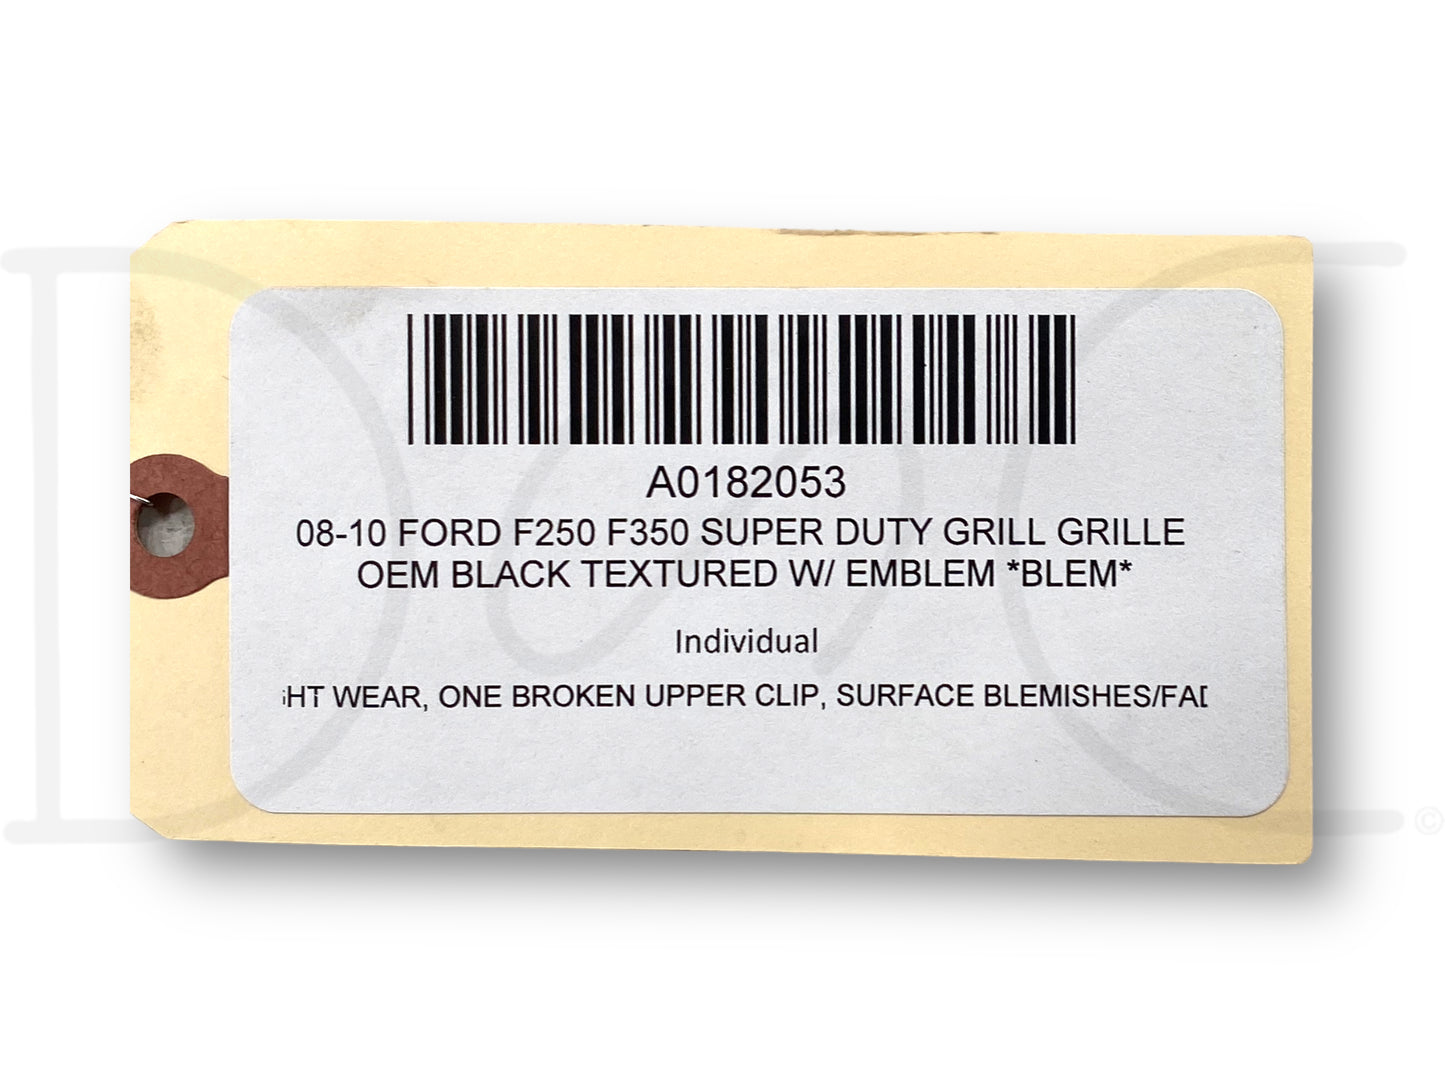 08-10 Ford F250 F350 Super Duty Grill Grille OEM Black Textured W/ Emblem *Blem*